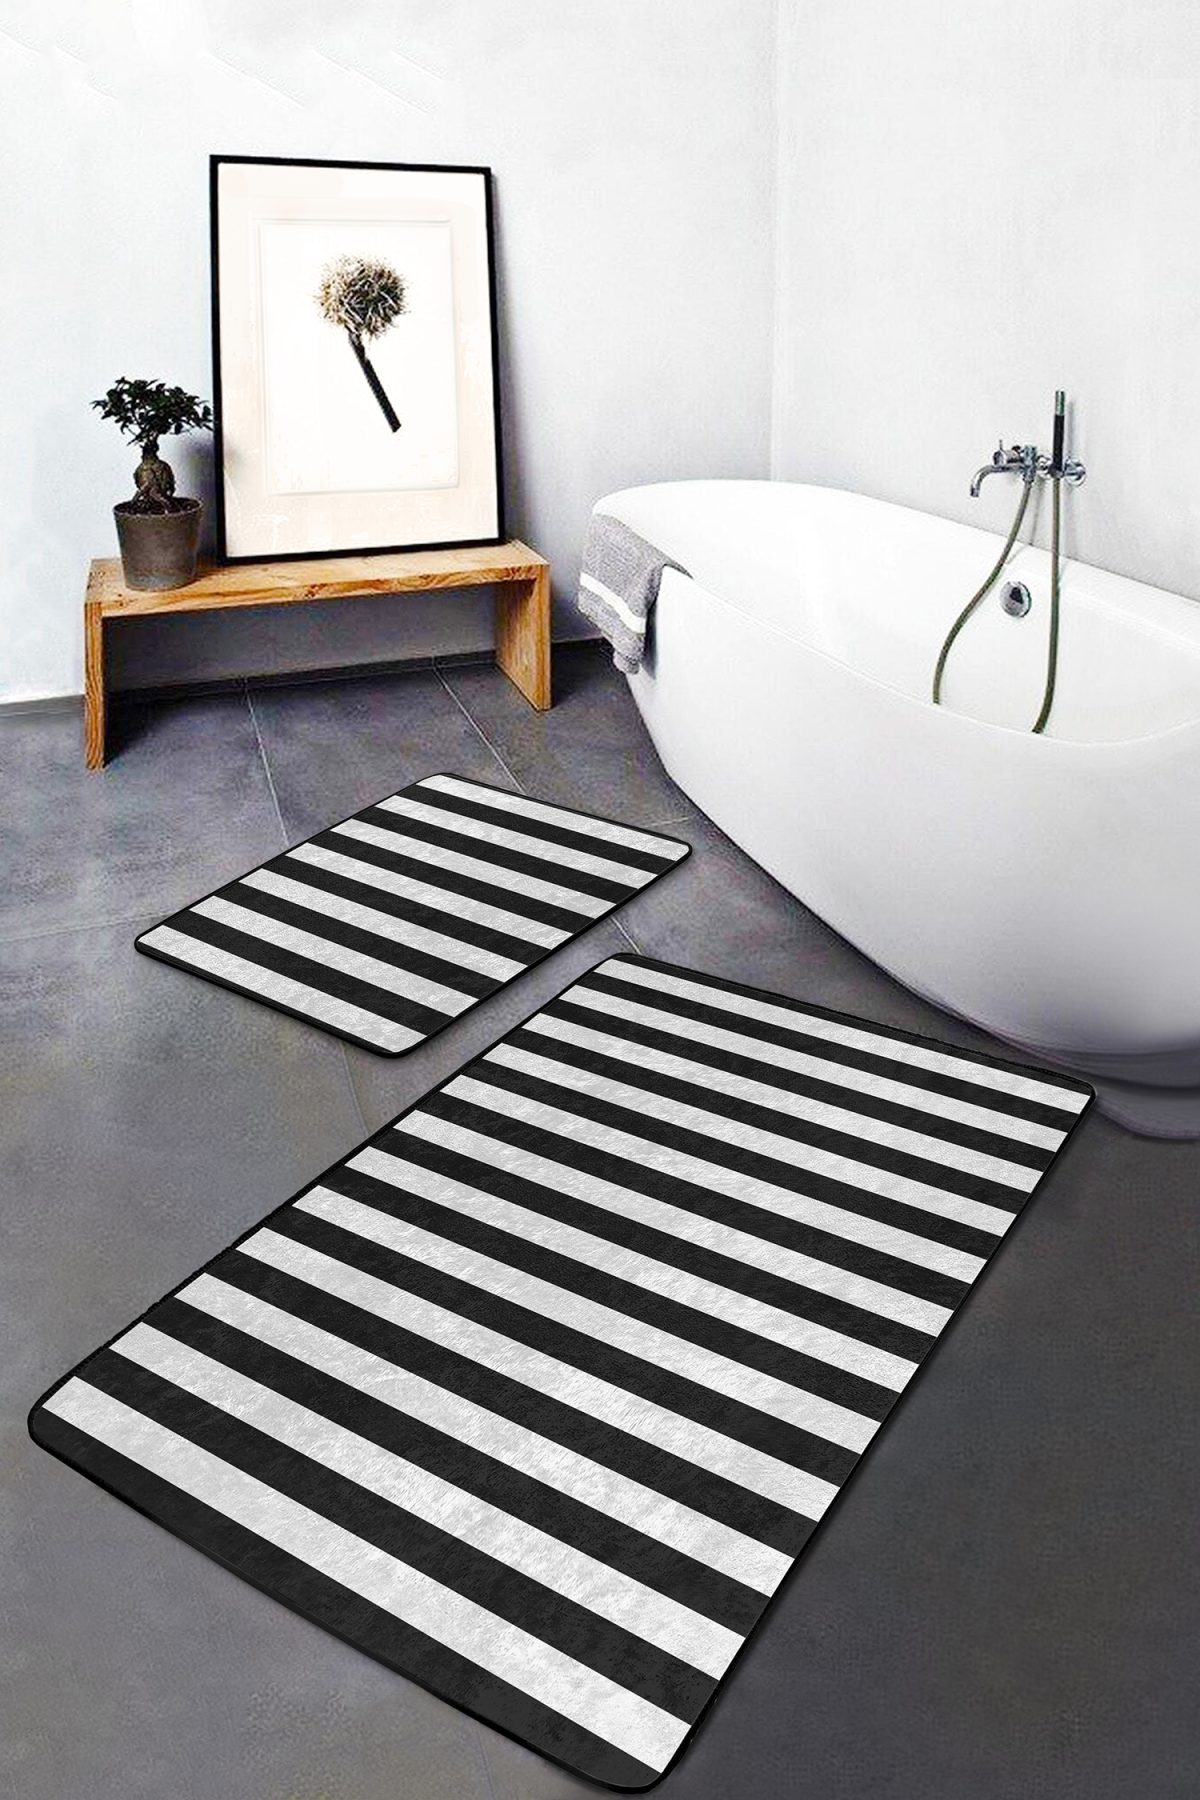 Siyah Beyaz Düz Çizgili Özel Tasarım 2'li Kaymaz Tabanlı Banyo & Mutfak Paspas Takımı Realhomes